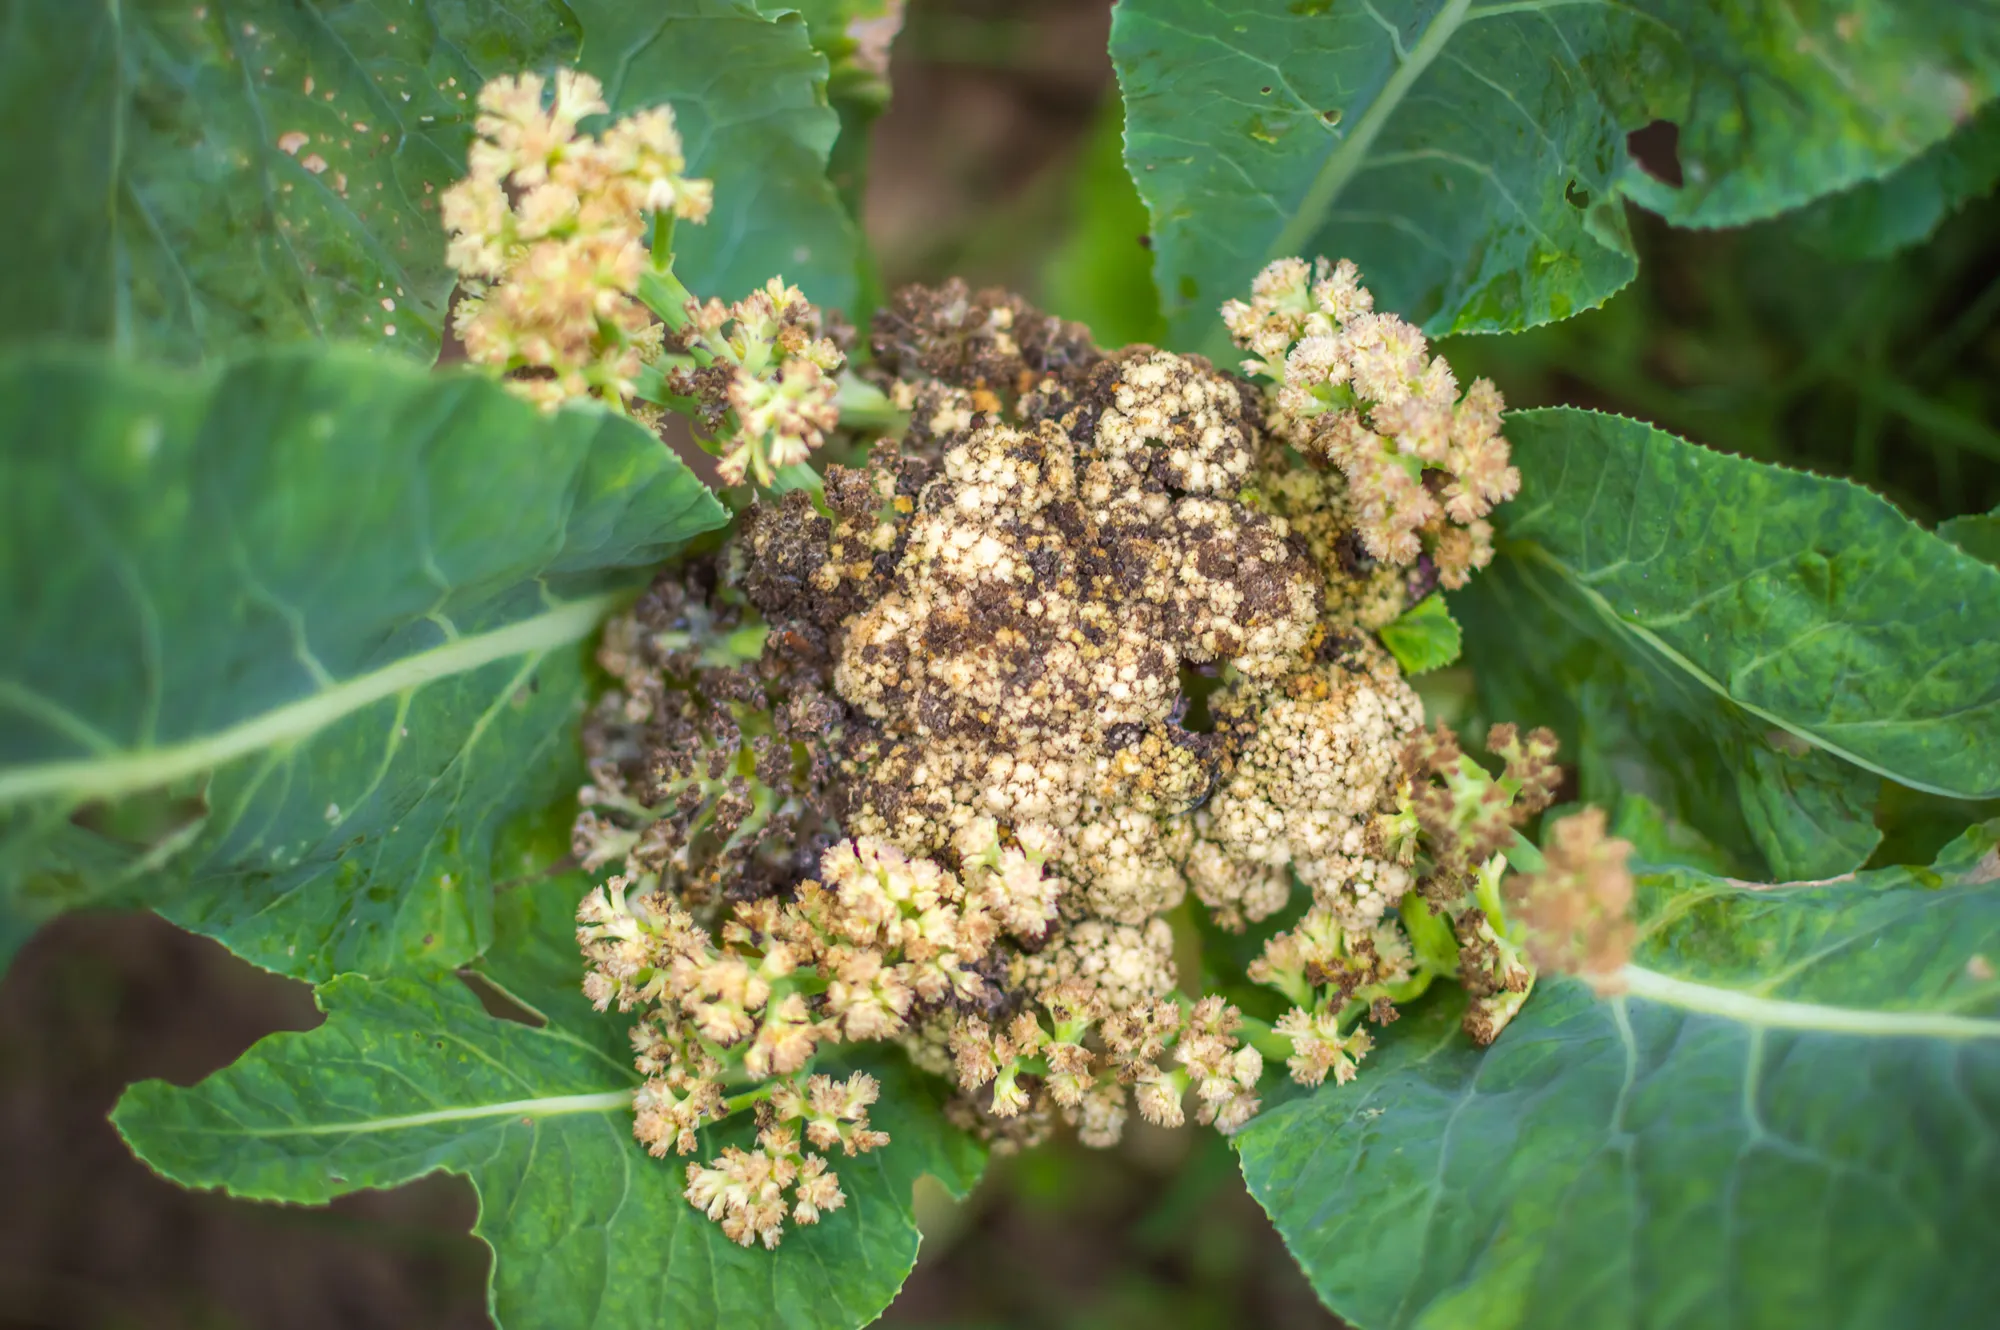 Diseased cauliflower caused due to the attack of fungus Sclerotinia sclerotiorum